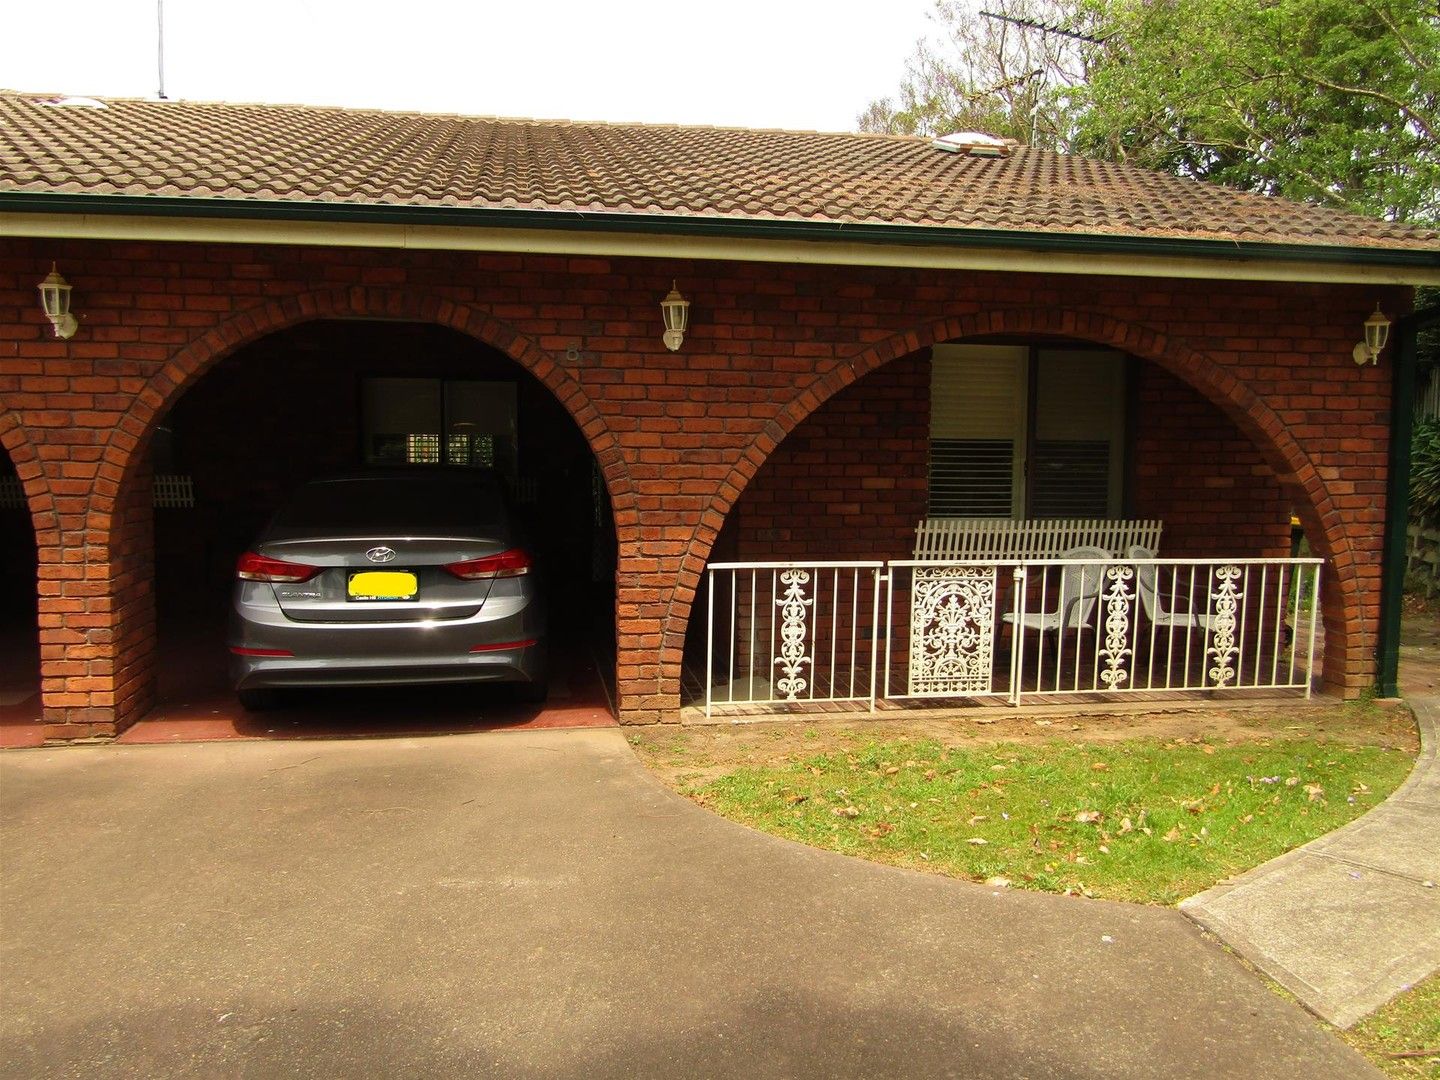 2 bedrooms Villa in 8/29-31 Hughes Avenue CASTLE HILL NSW, 2154